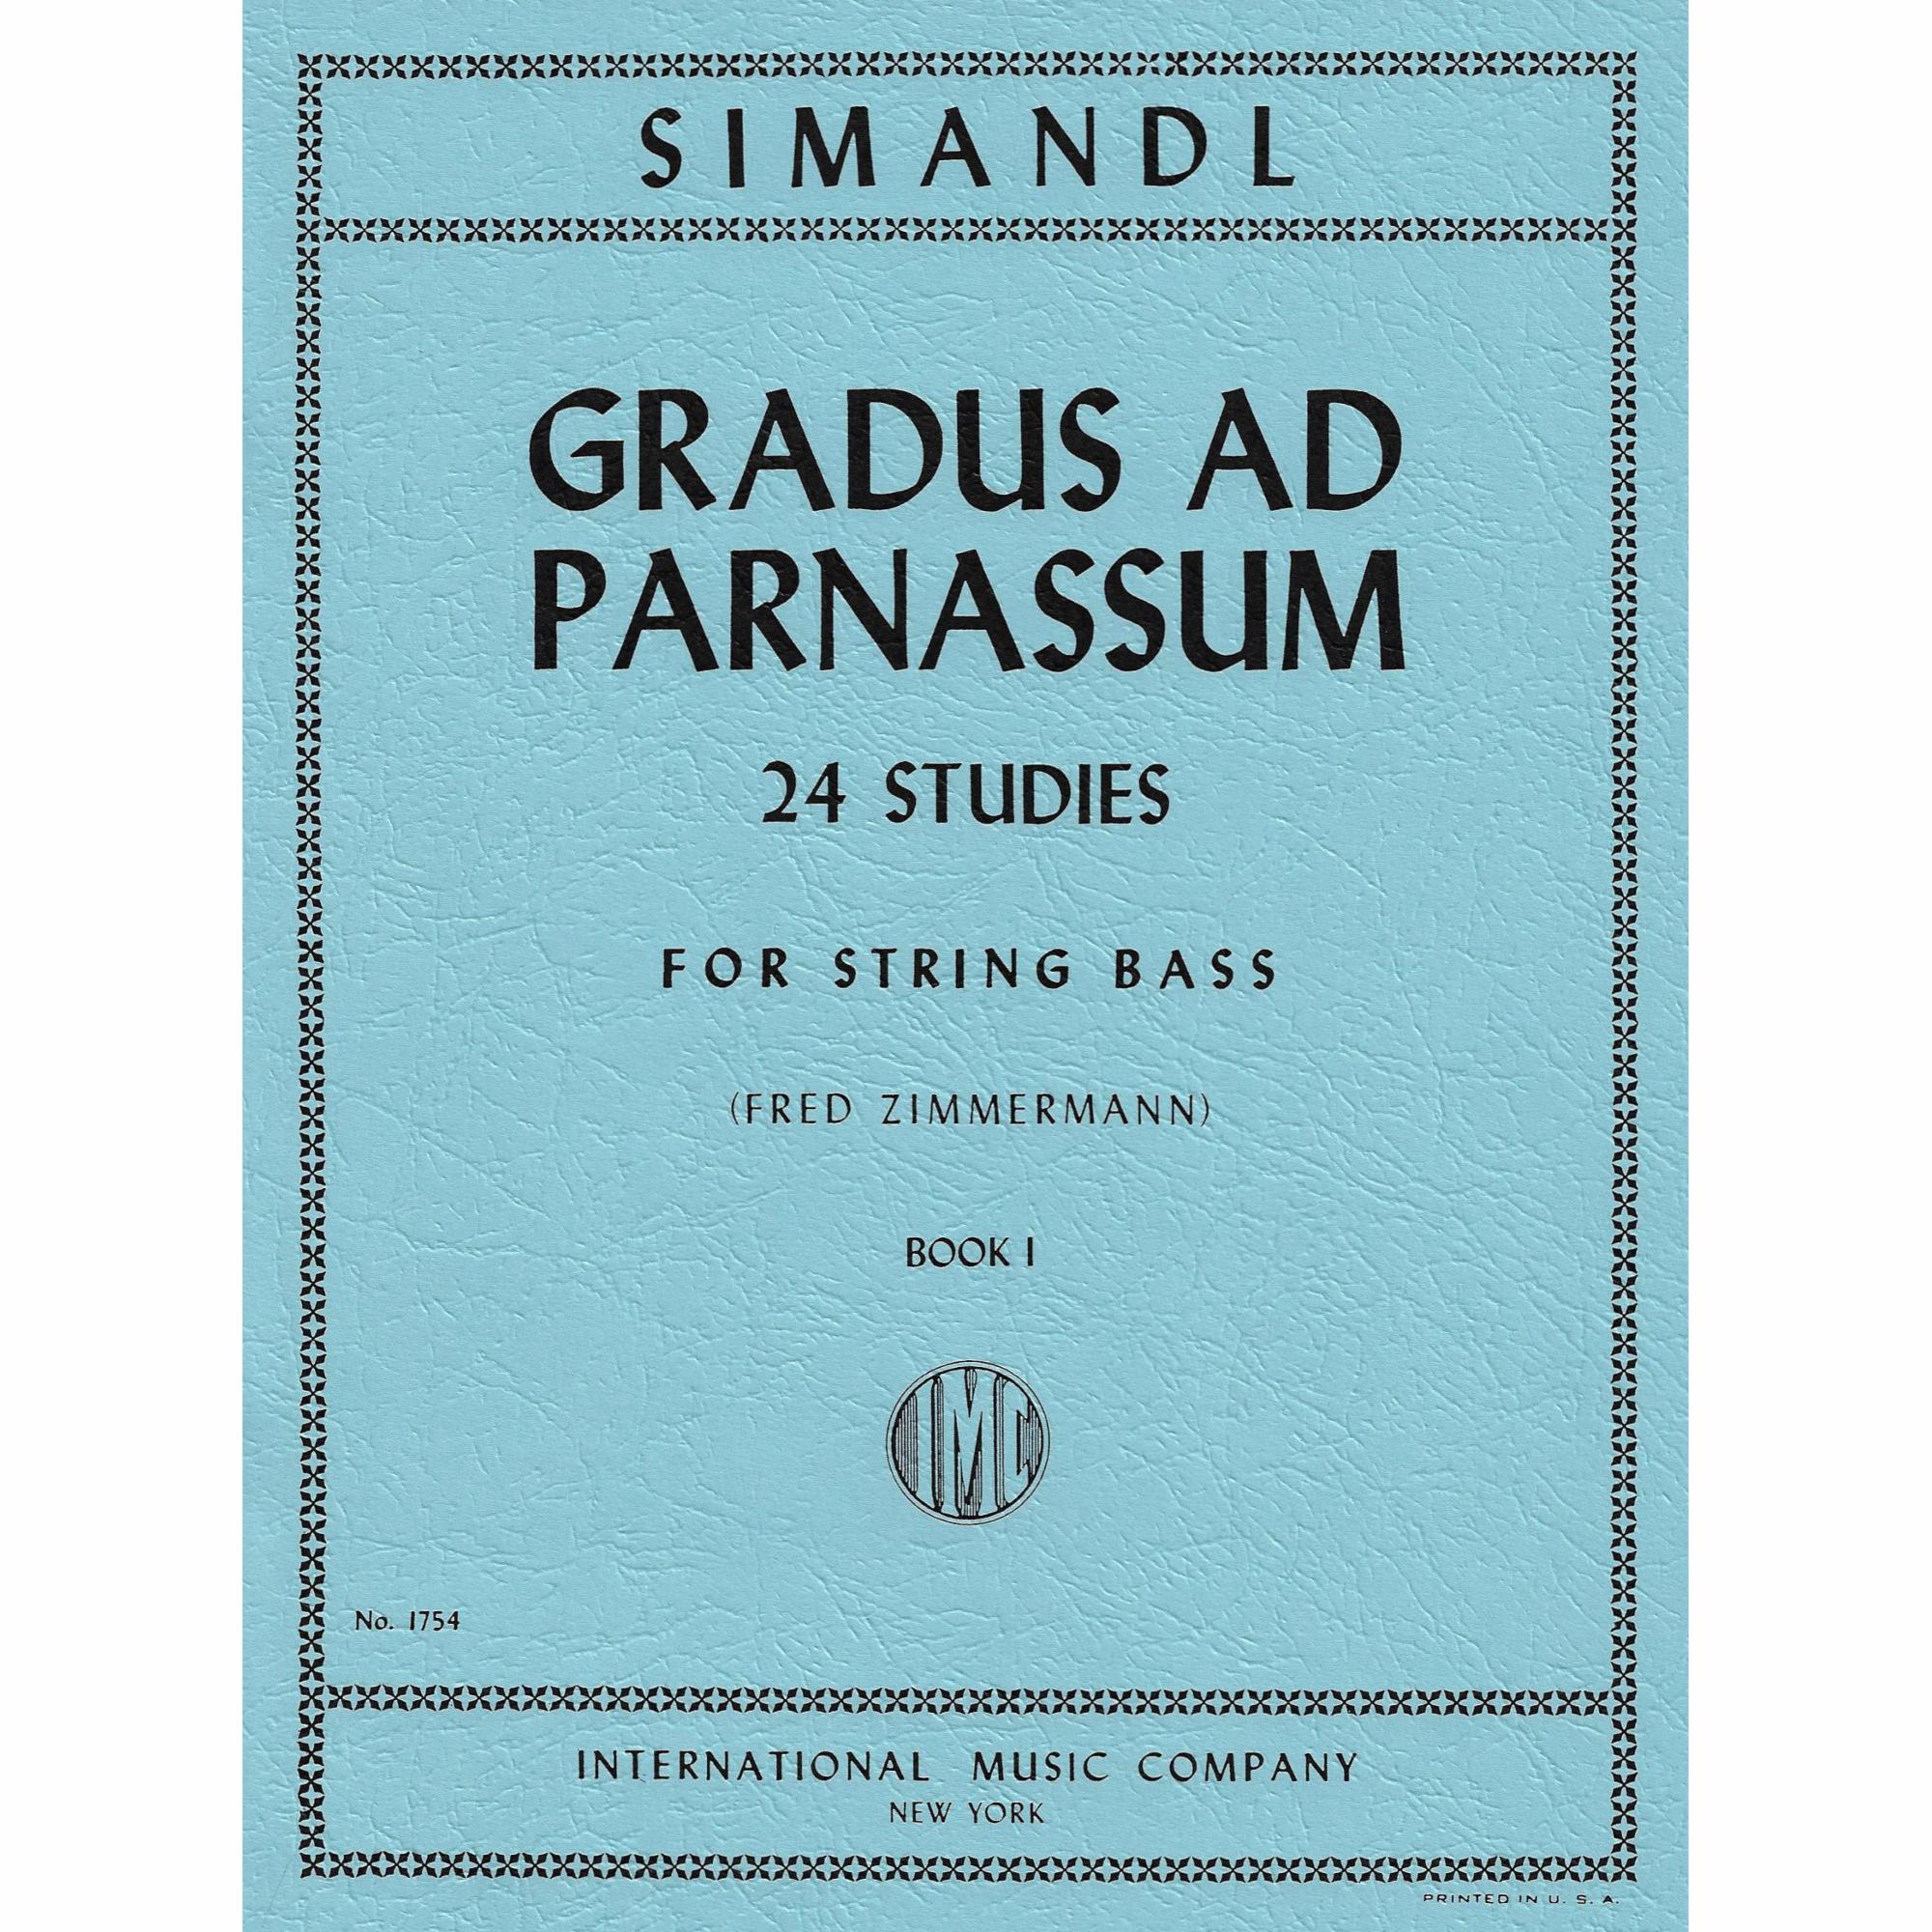 Simandl -- Gradus ad Parnassum, Books I-II for Bass